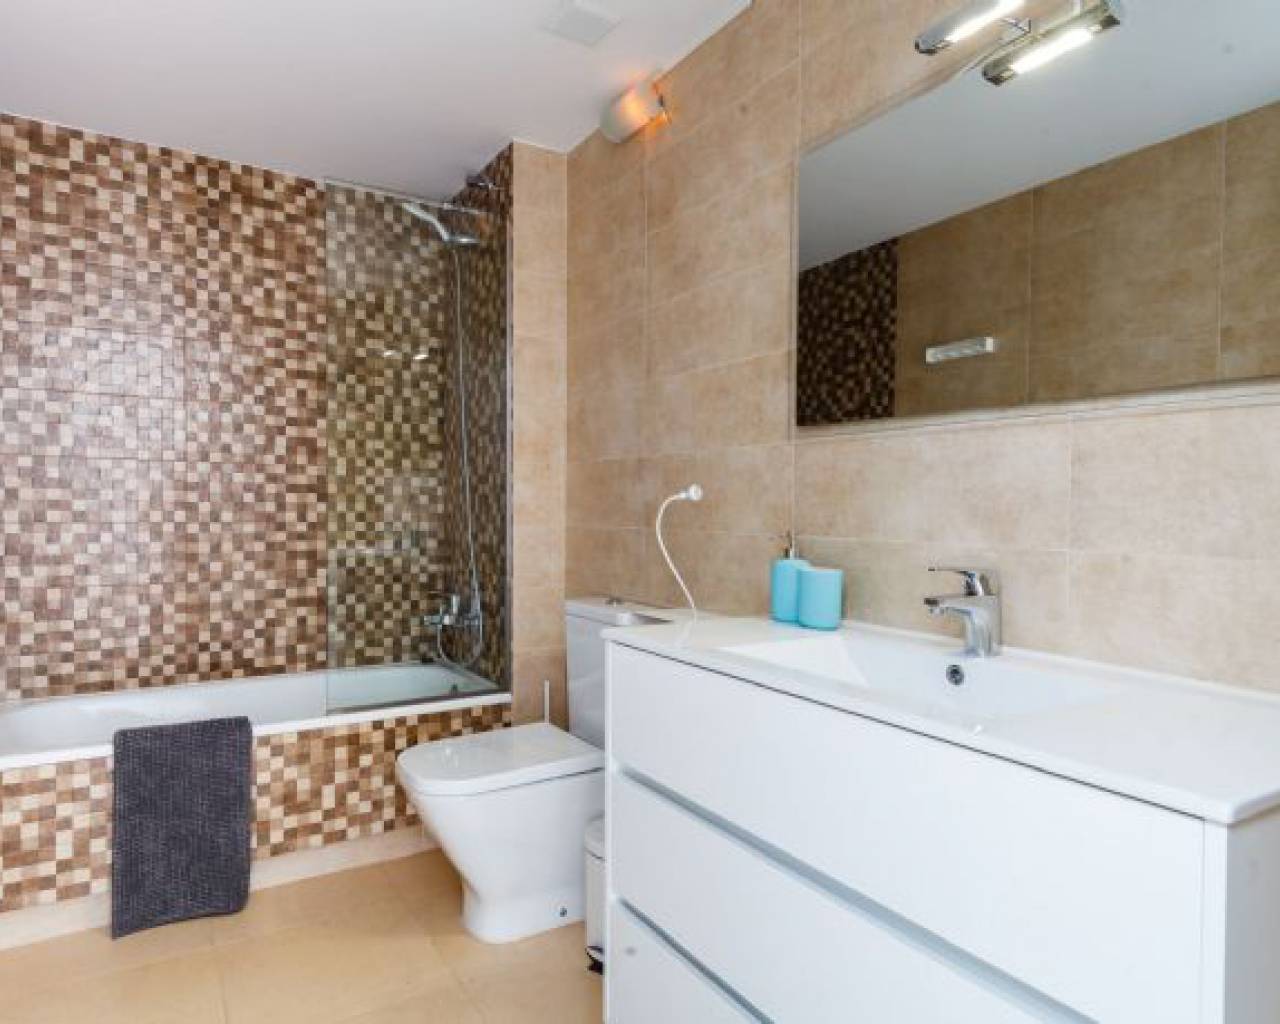 Rent a apartment in Palma, Mallorca-Mallorca rental agents